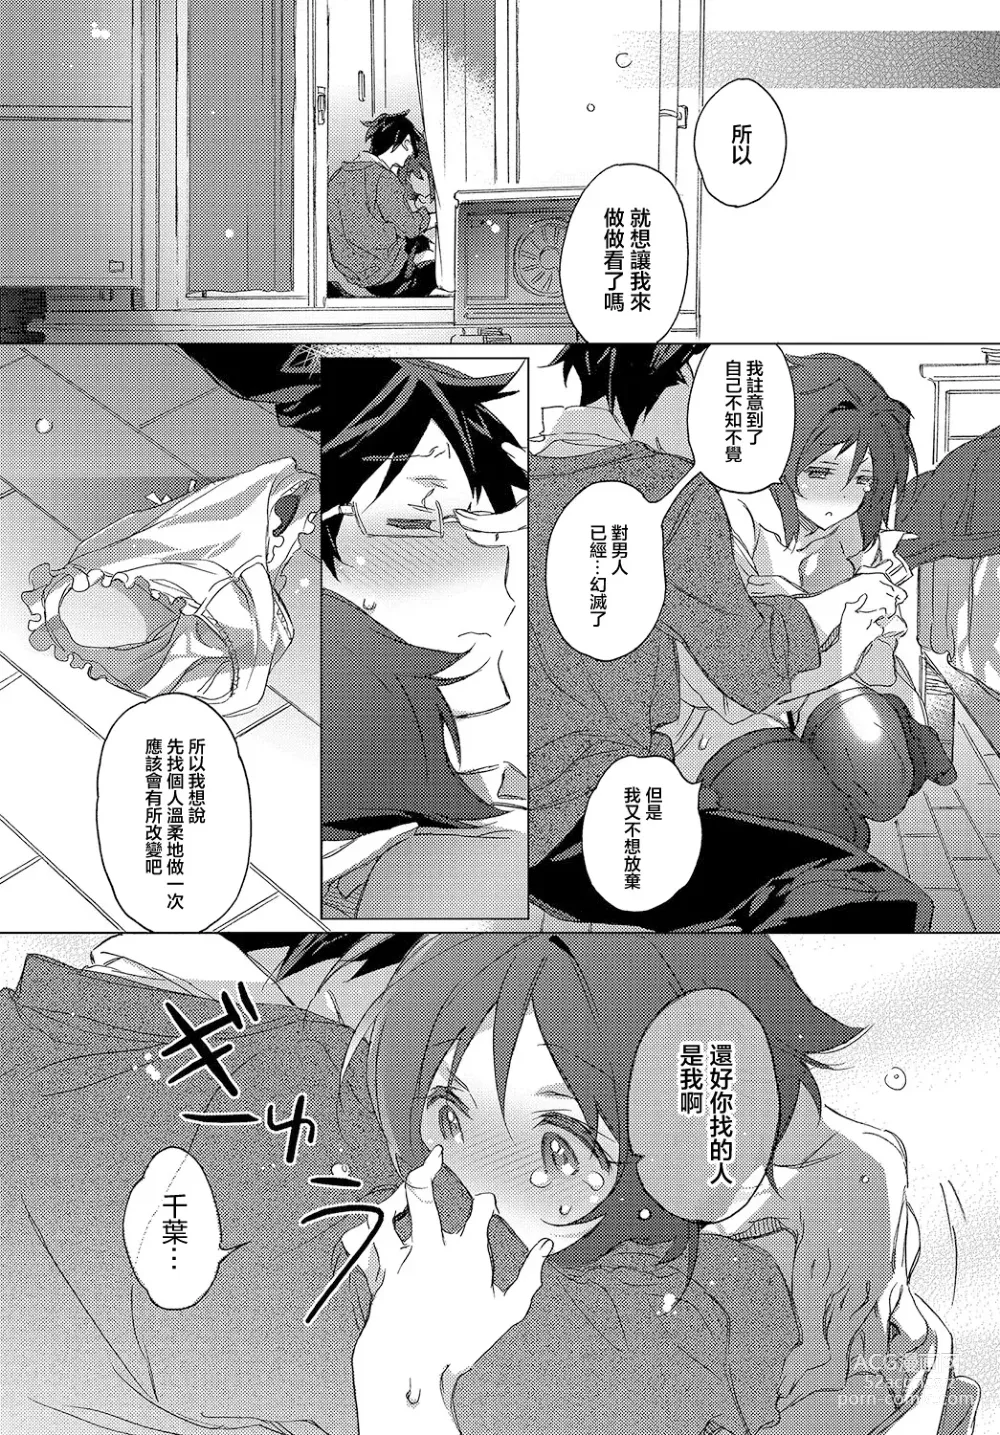 Page 9 of manga 真心莫比烏斯環